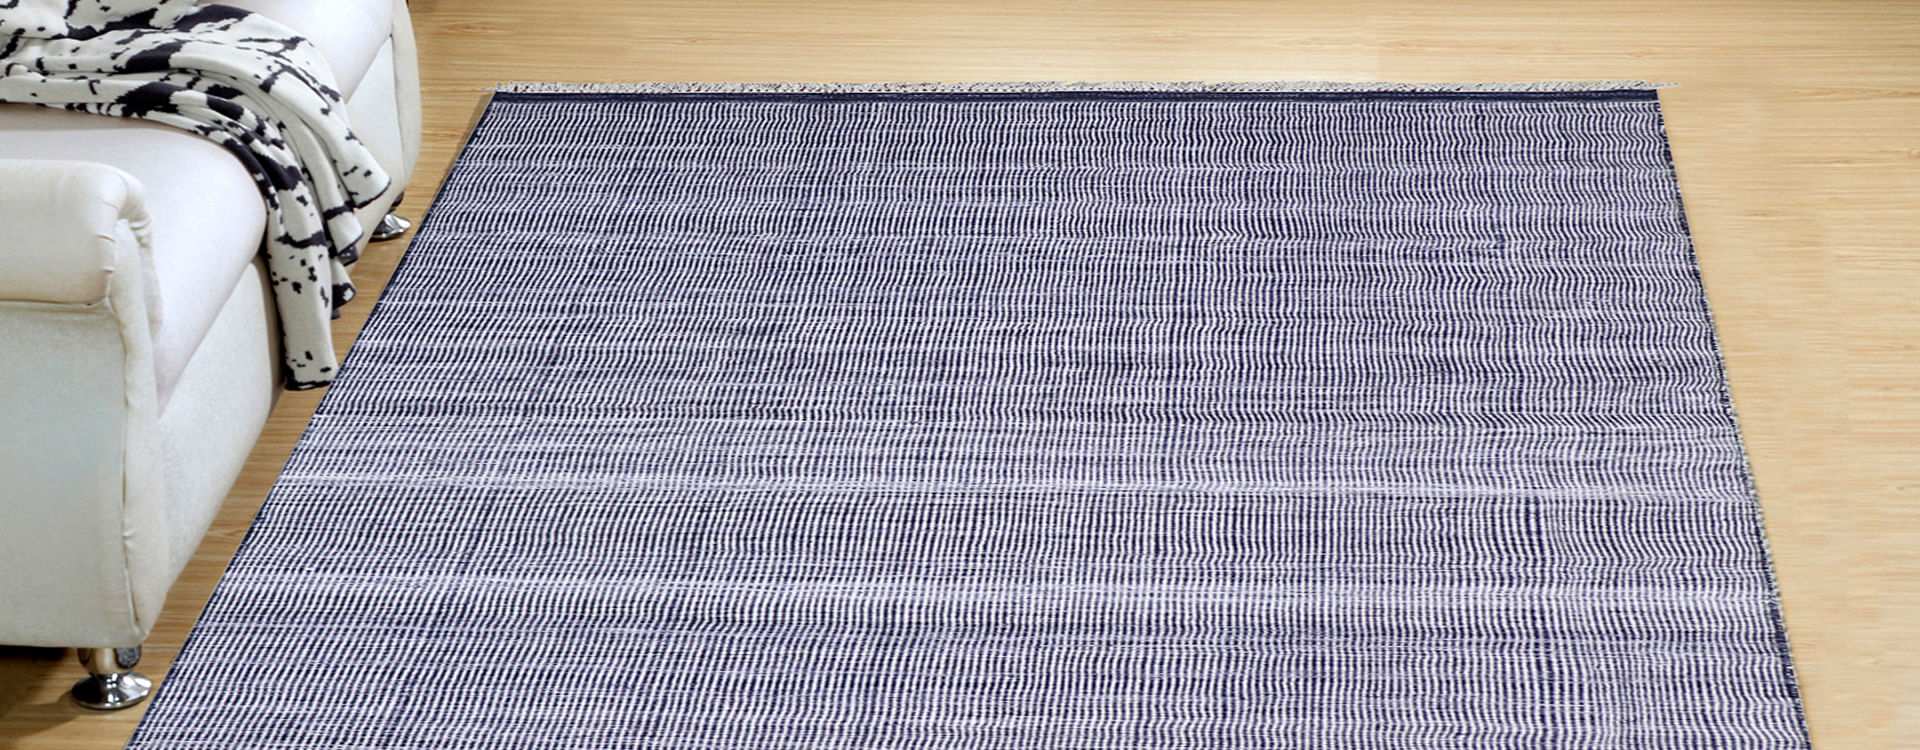 A rectangular blue rug with subtle lines